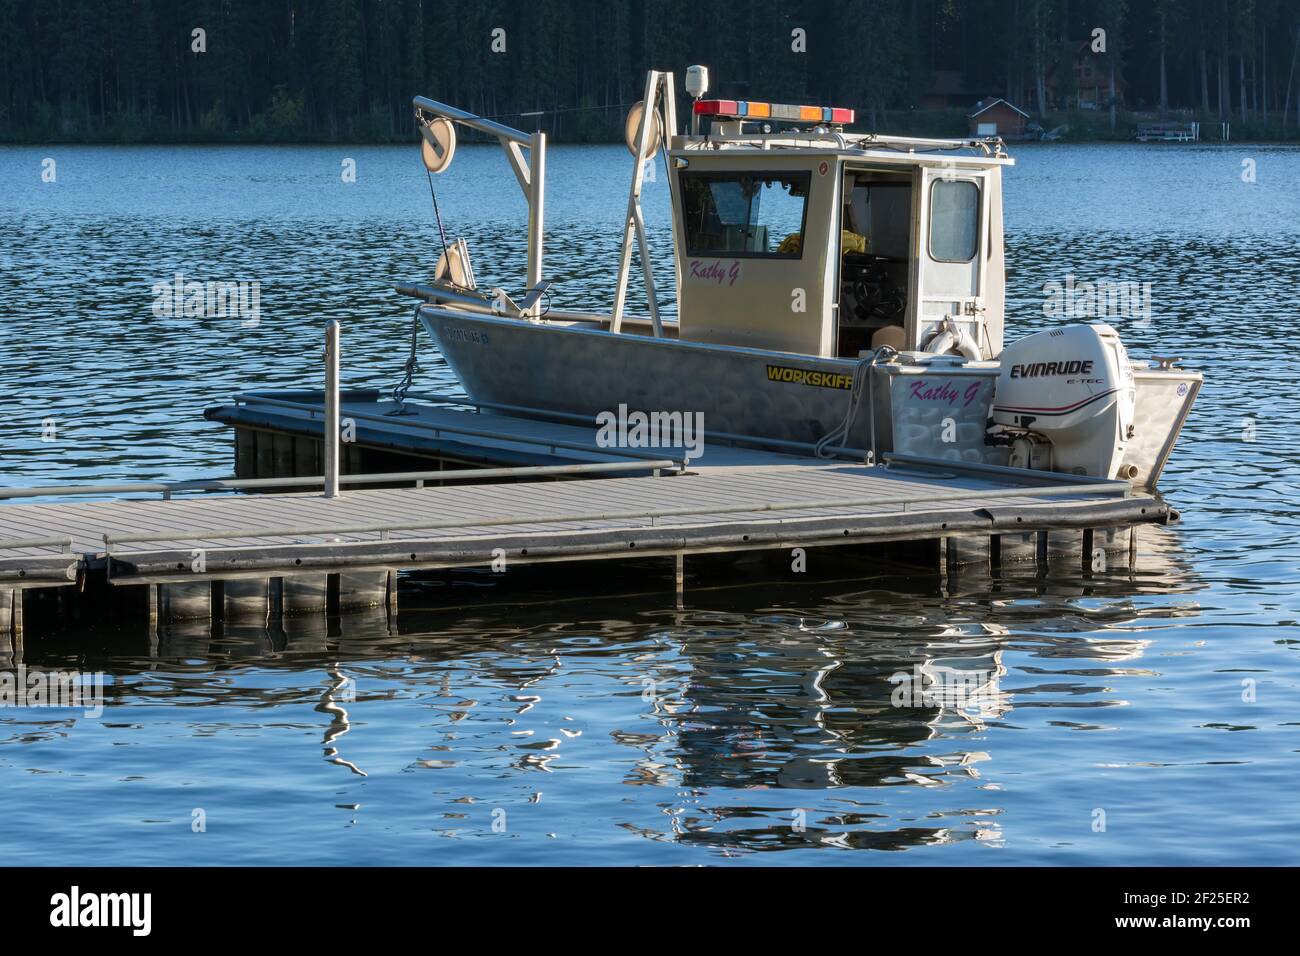 PLACID LAKE, MONTANA/USA - SEPTEMBER 20 : Boat on Placid Lake in Montana on September 20, 2013 Stock Photo